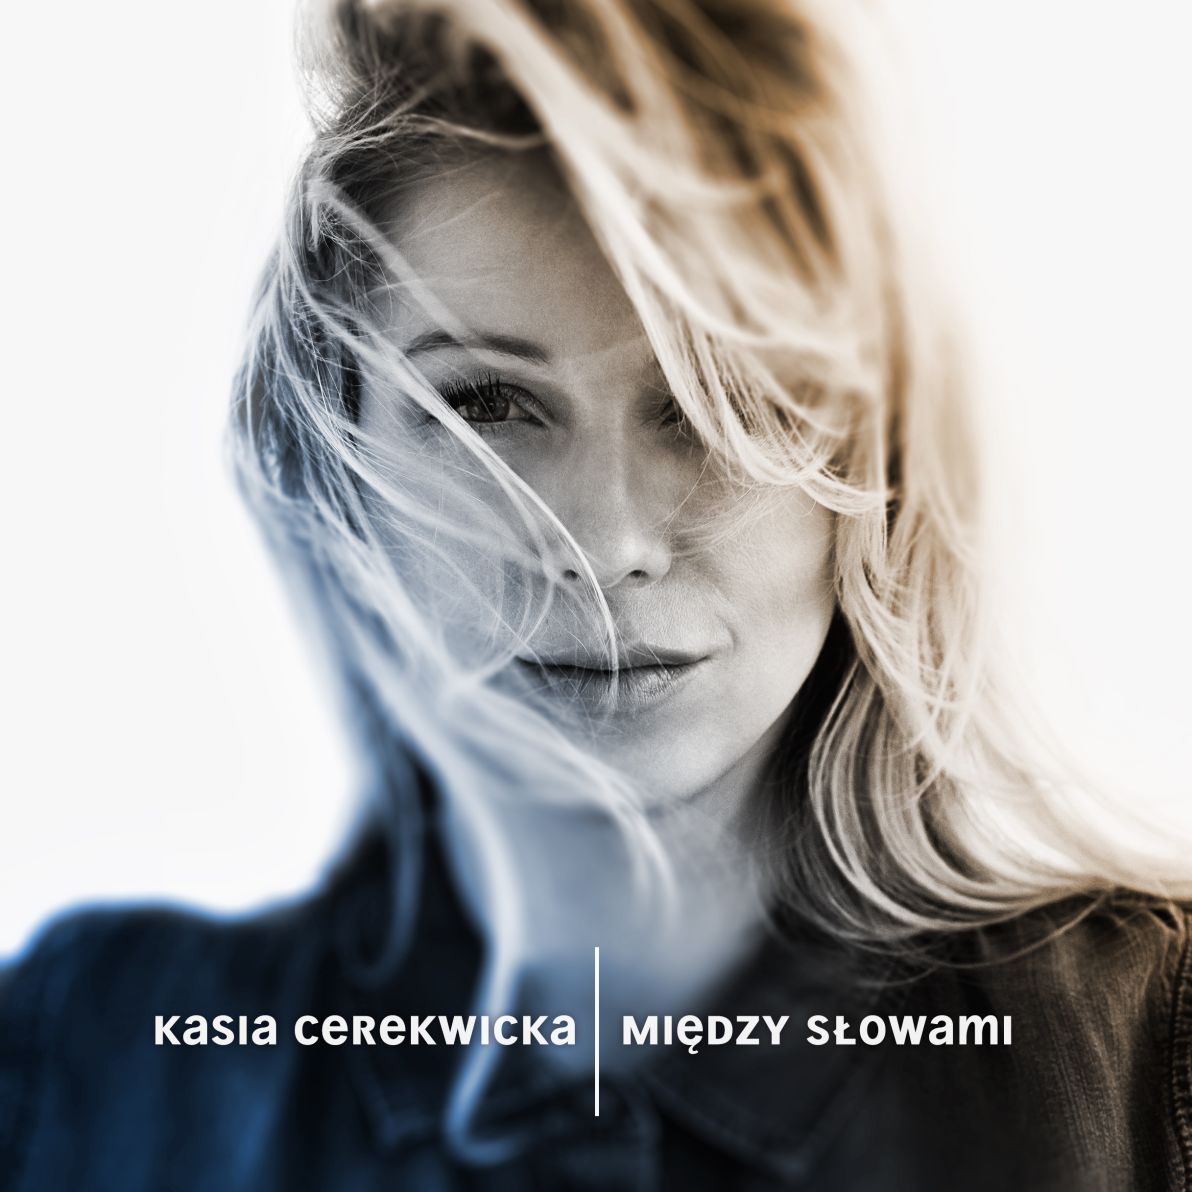 kasia_cerekwicka - miedzy_slowami_